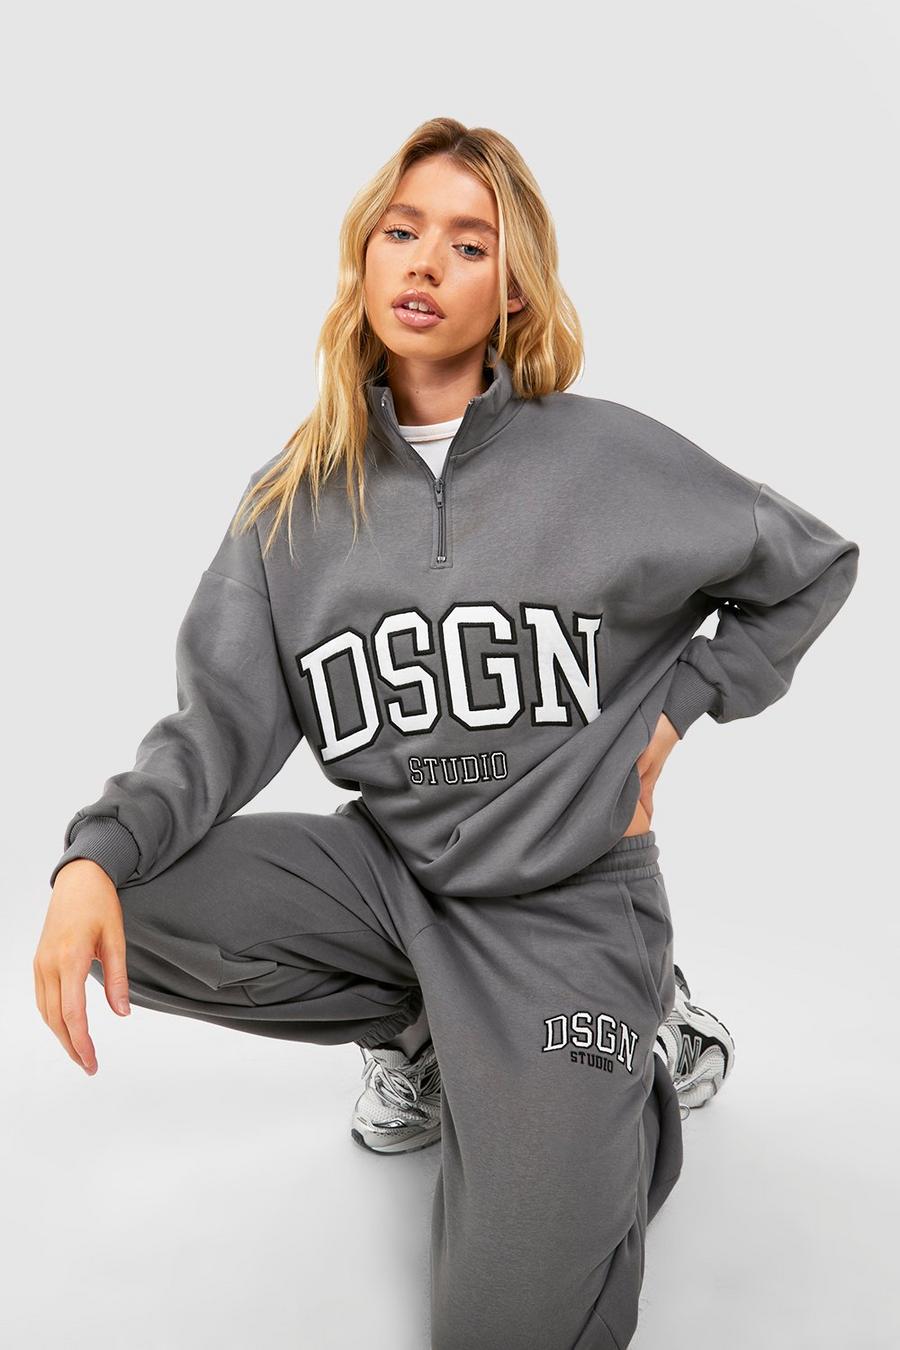 Oversize Sweatshirt mit Dsgn Studio Applikation und halbem Reißverschluss, Charcoal image number 1